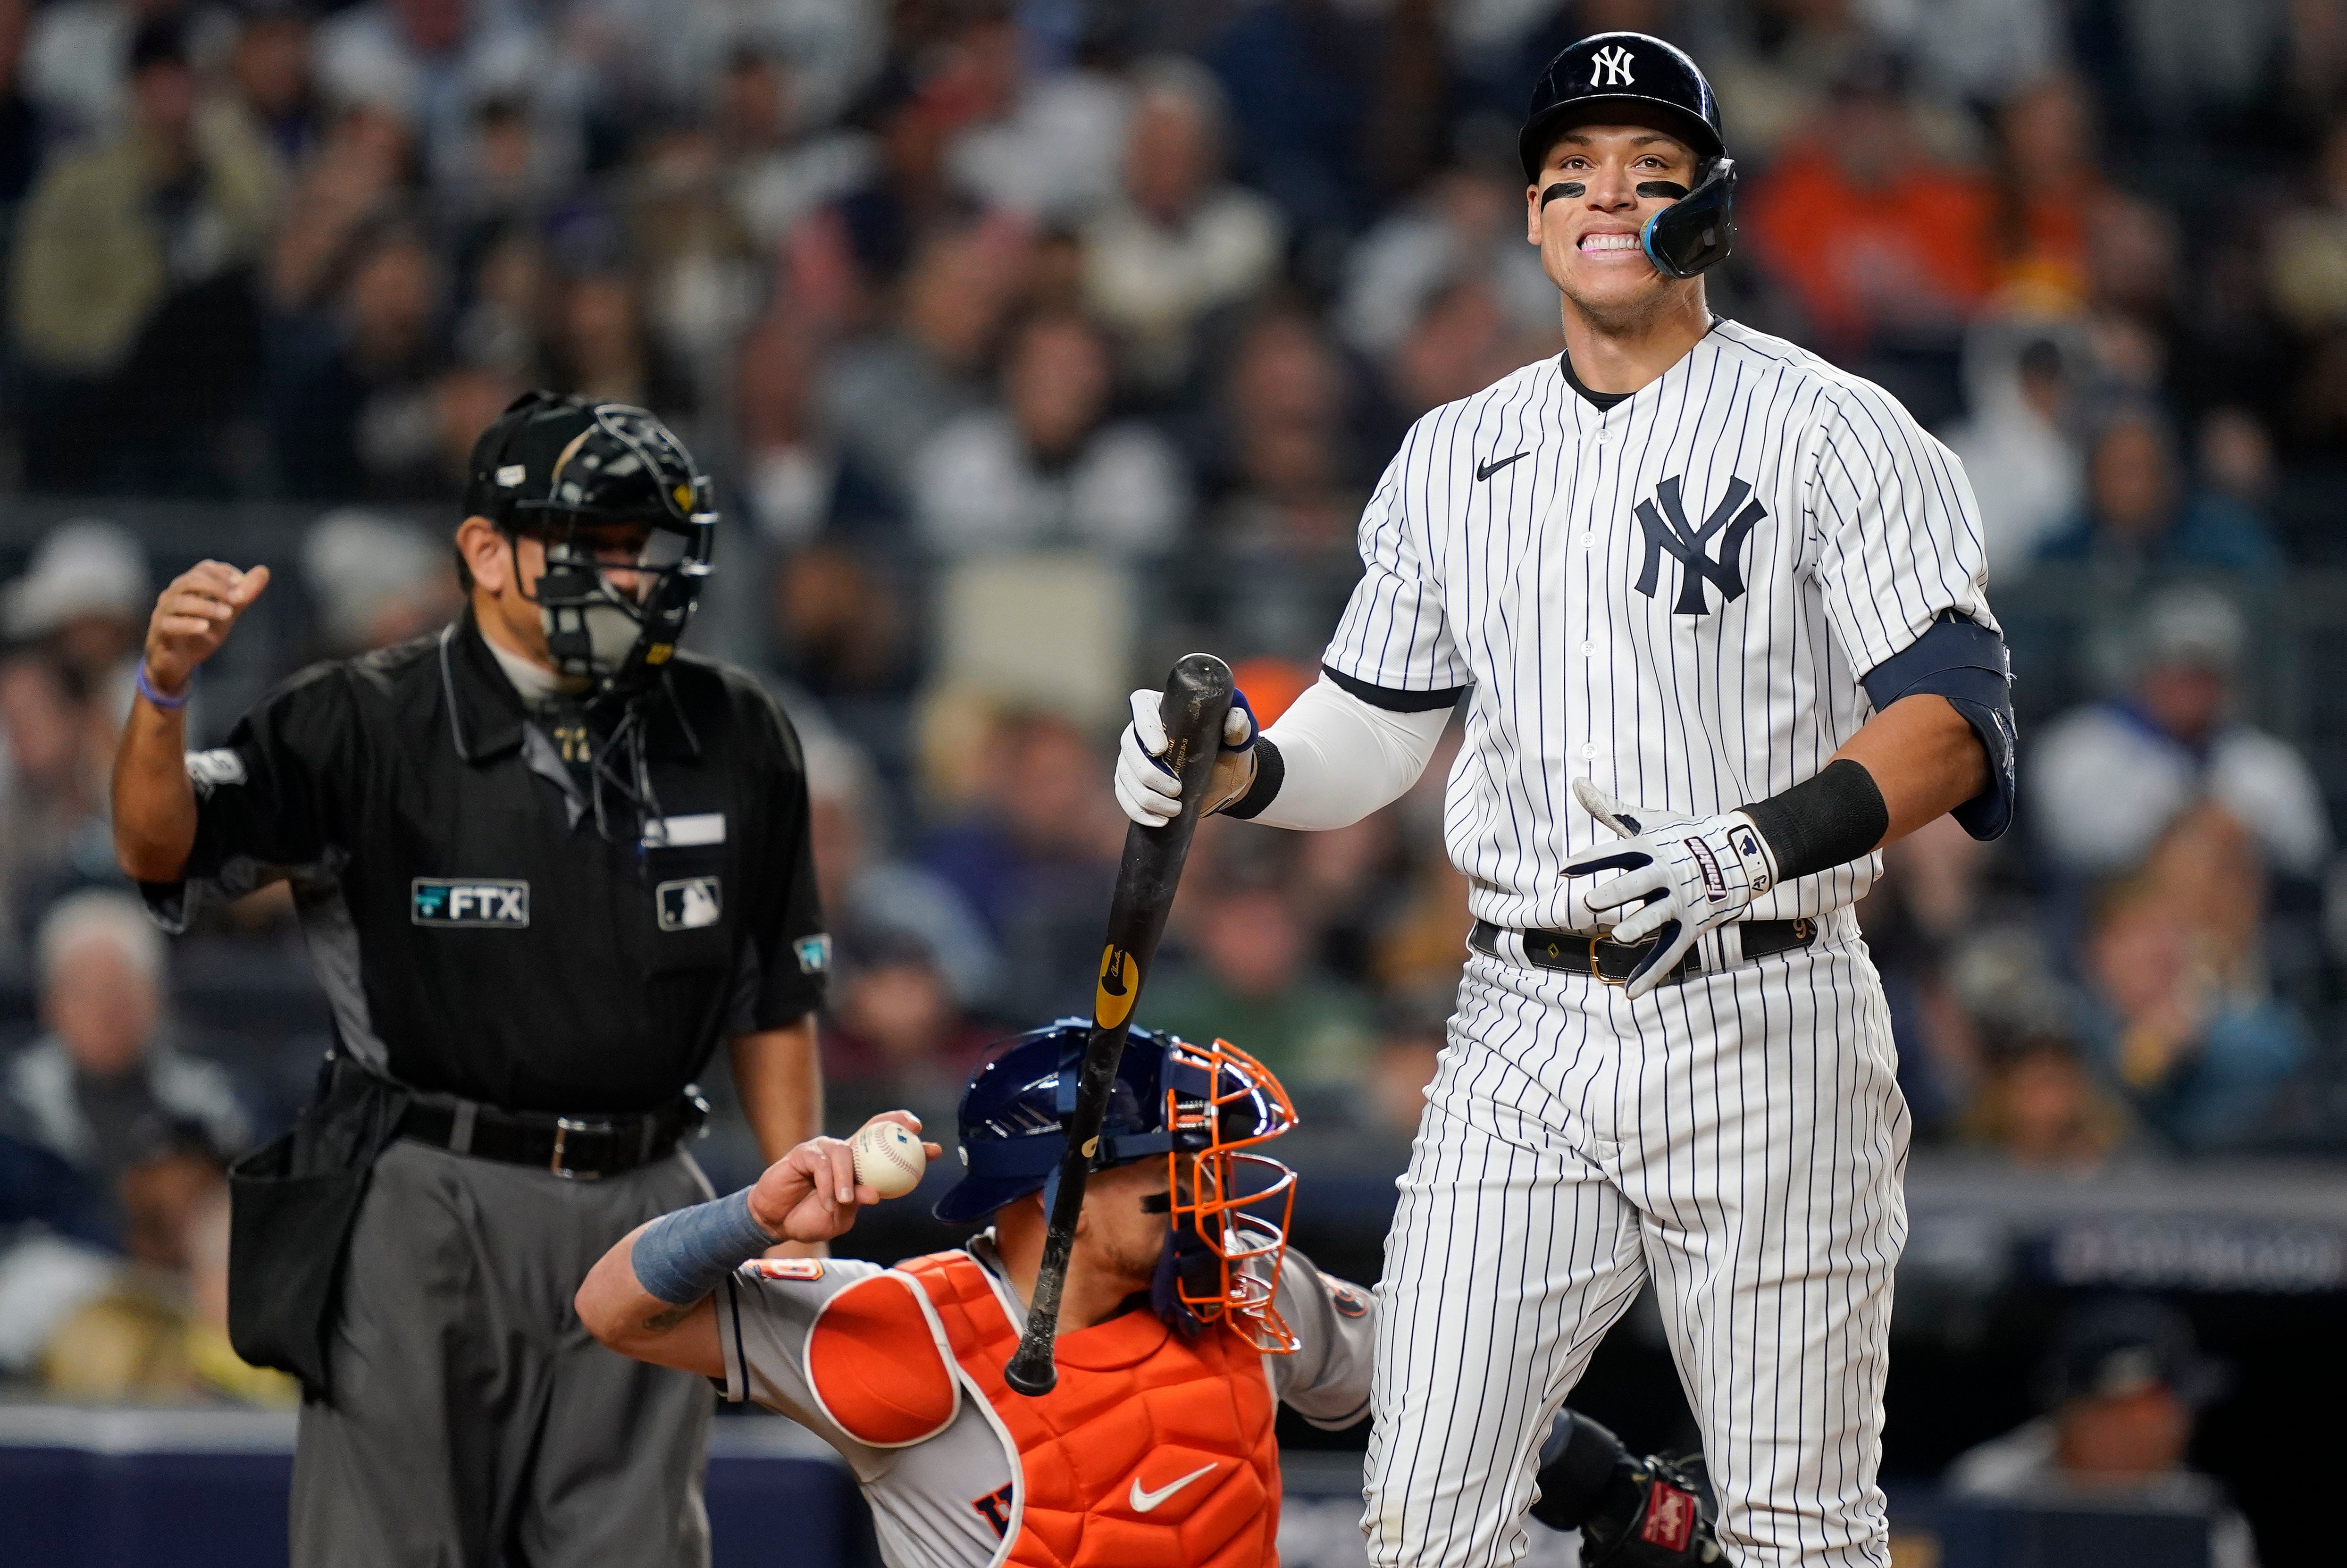 Astros' Jose Altuve says he'd choose Yankees' Aaron Judge for AL